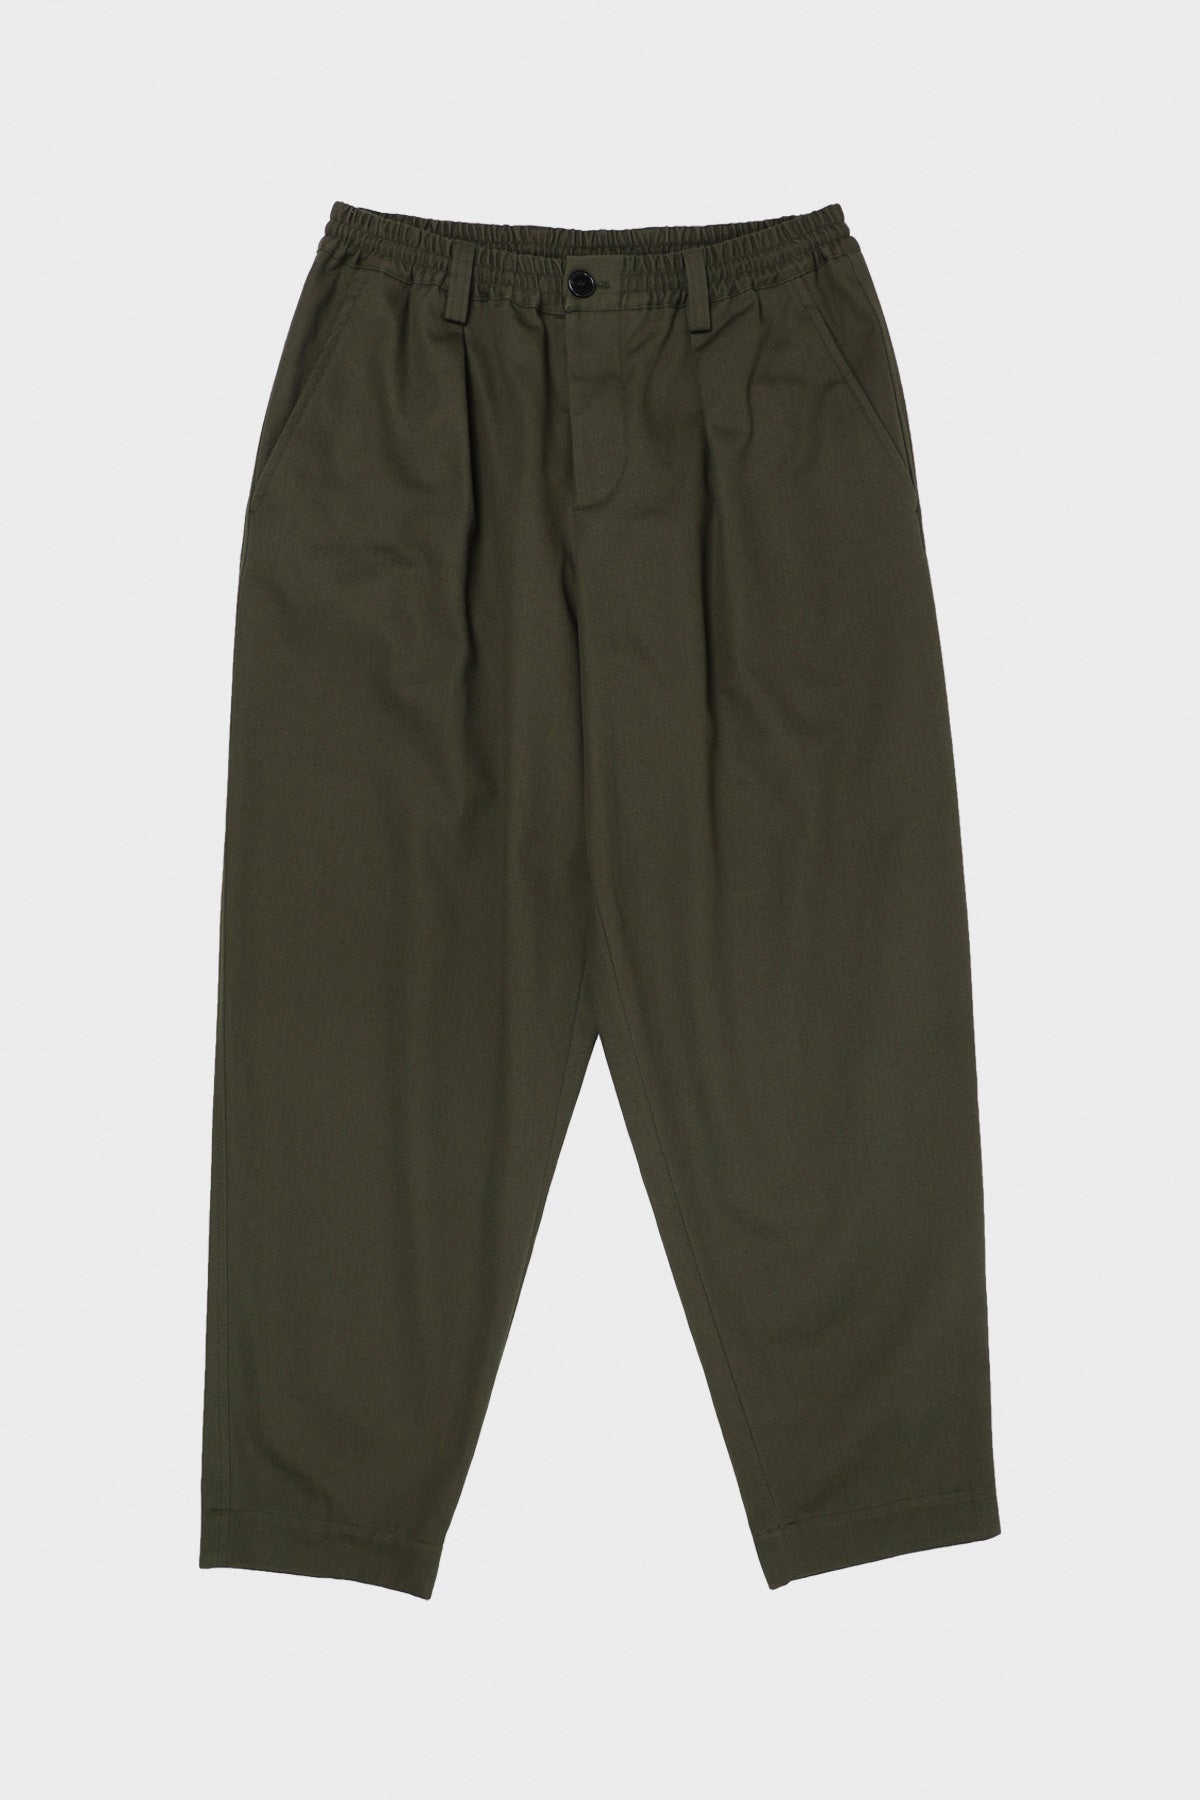 Marni Green Drawstring Trousers